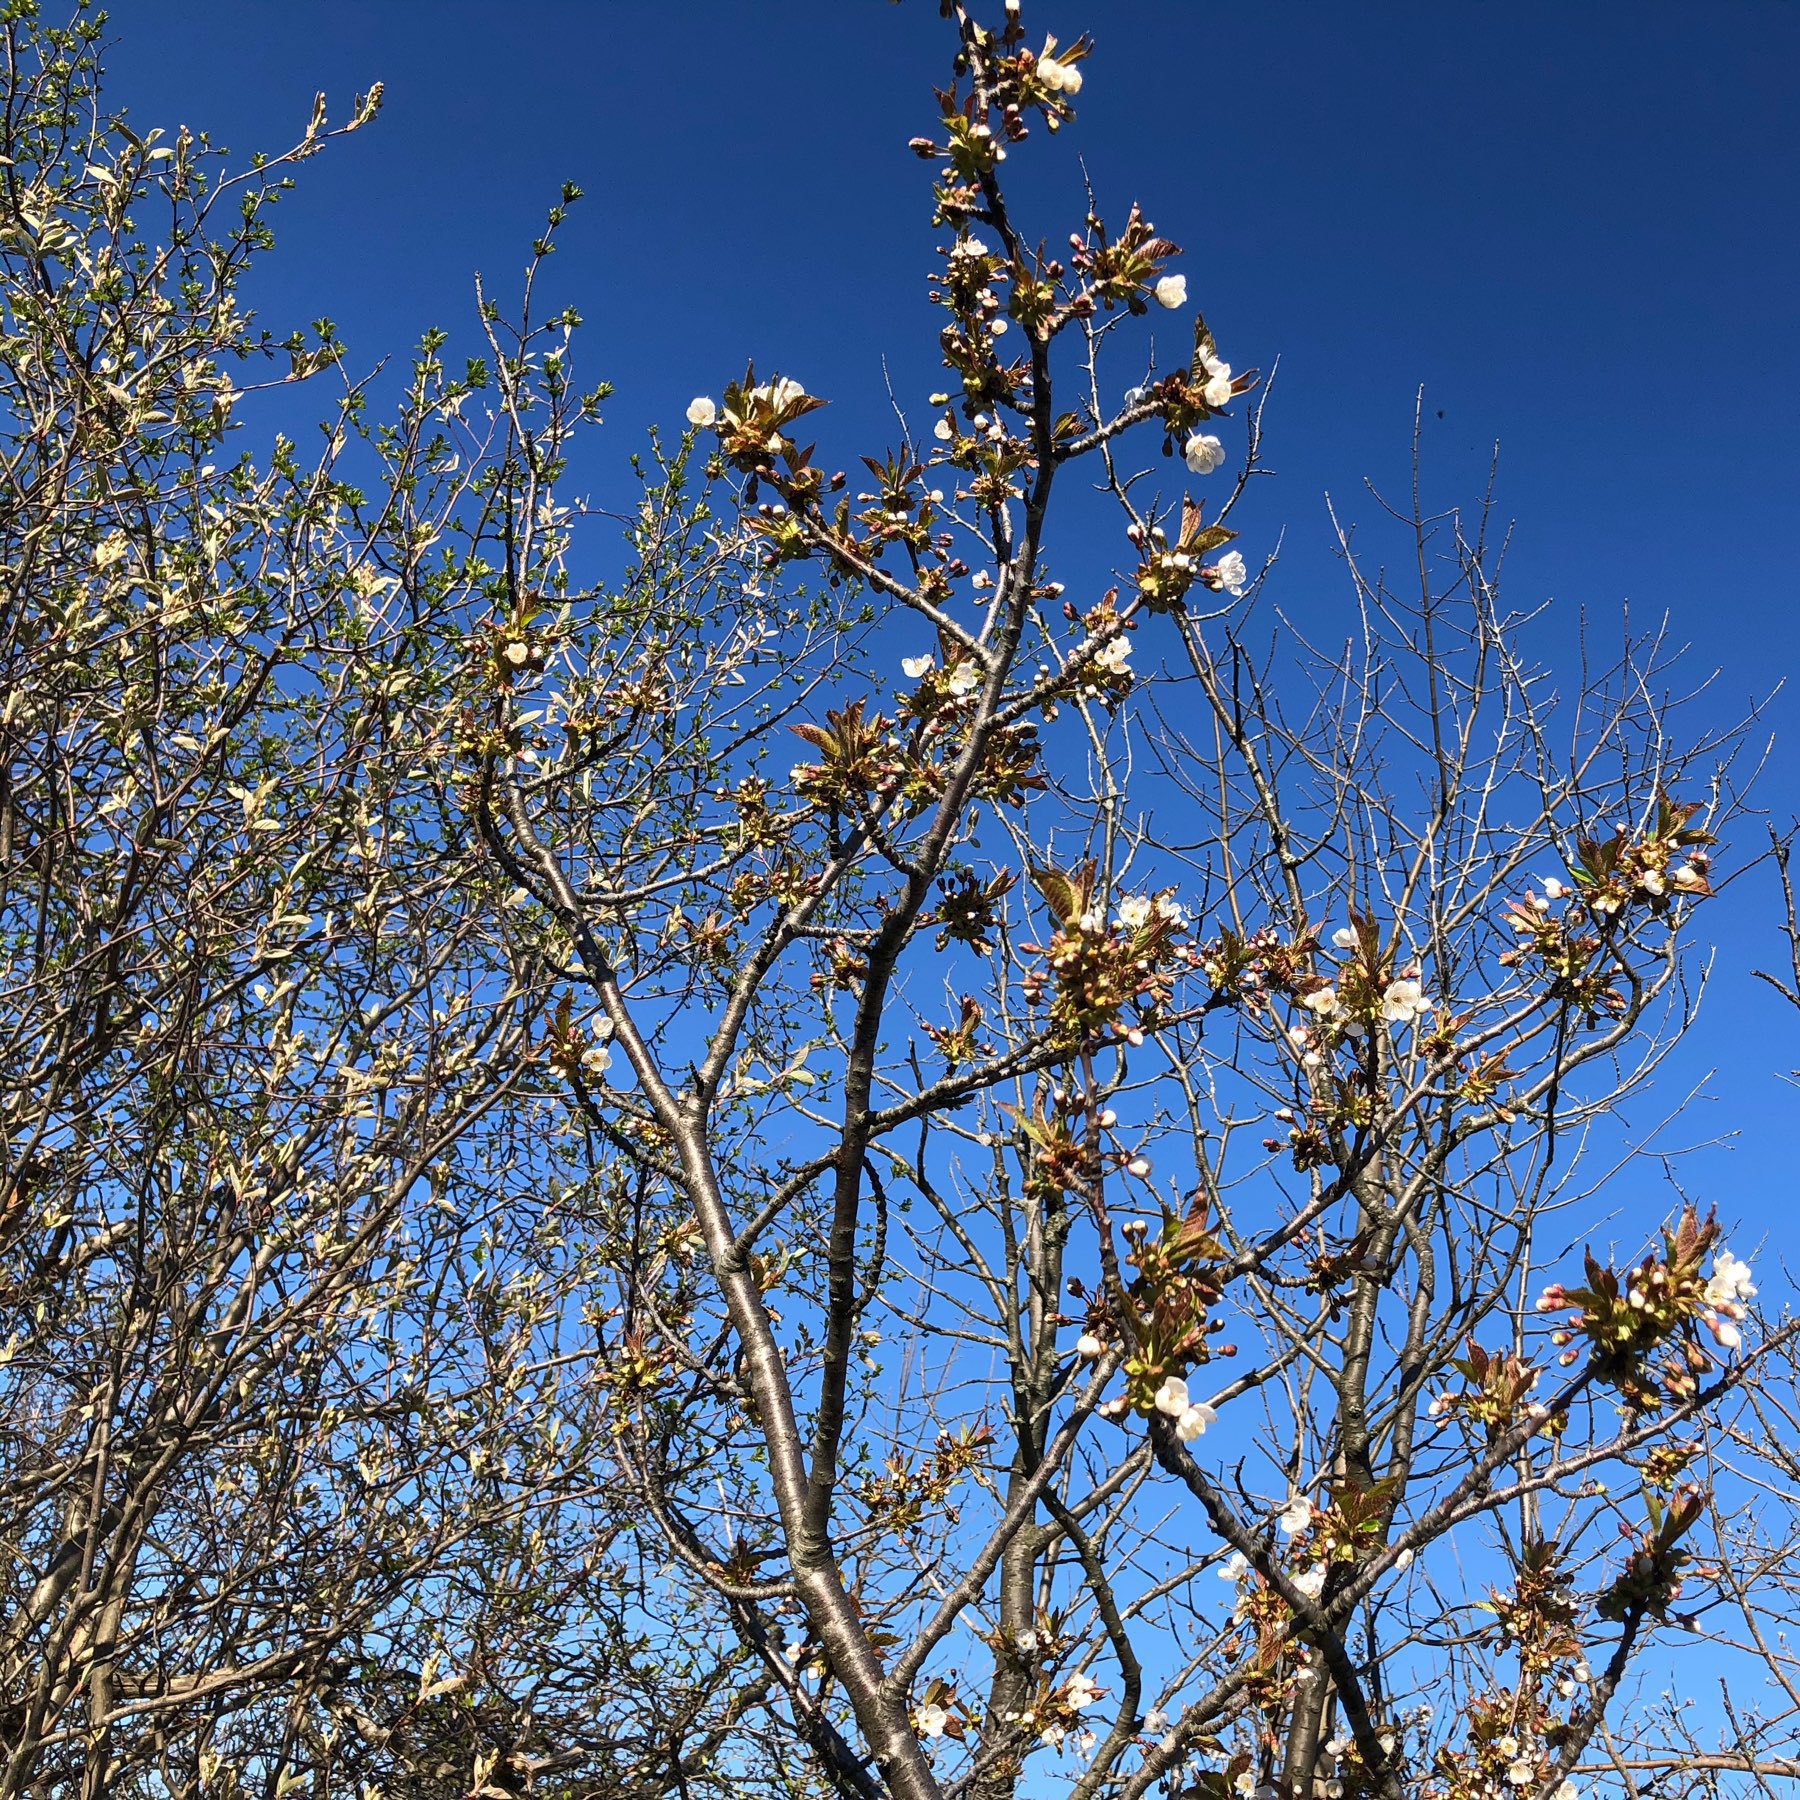 fruit blossoms against a blue sky